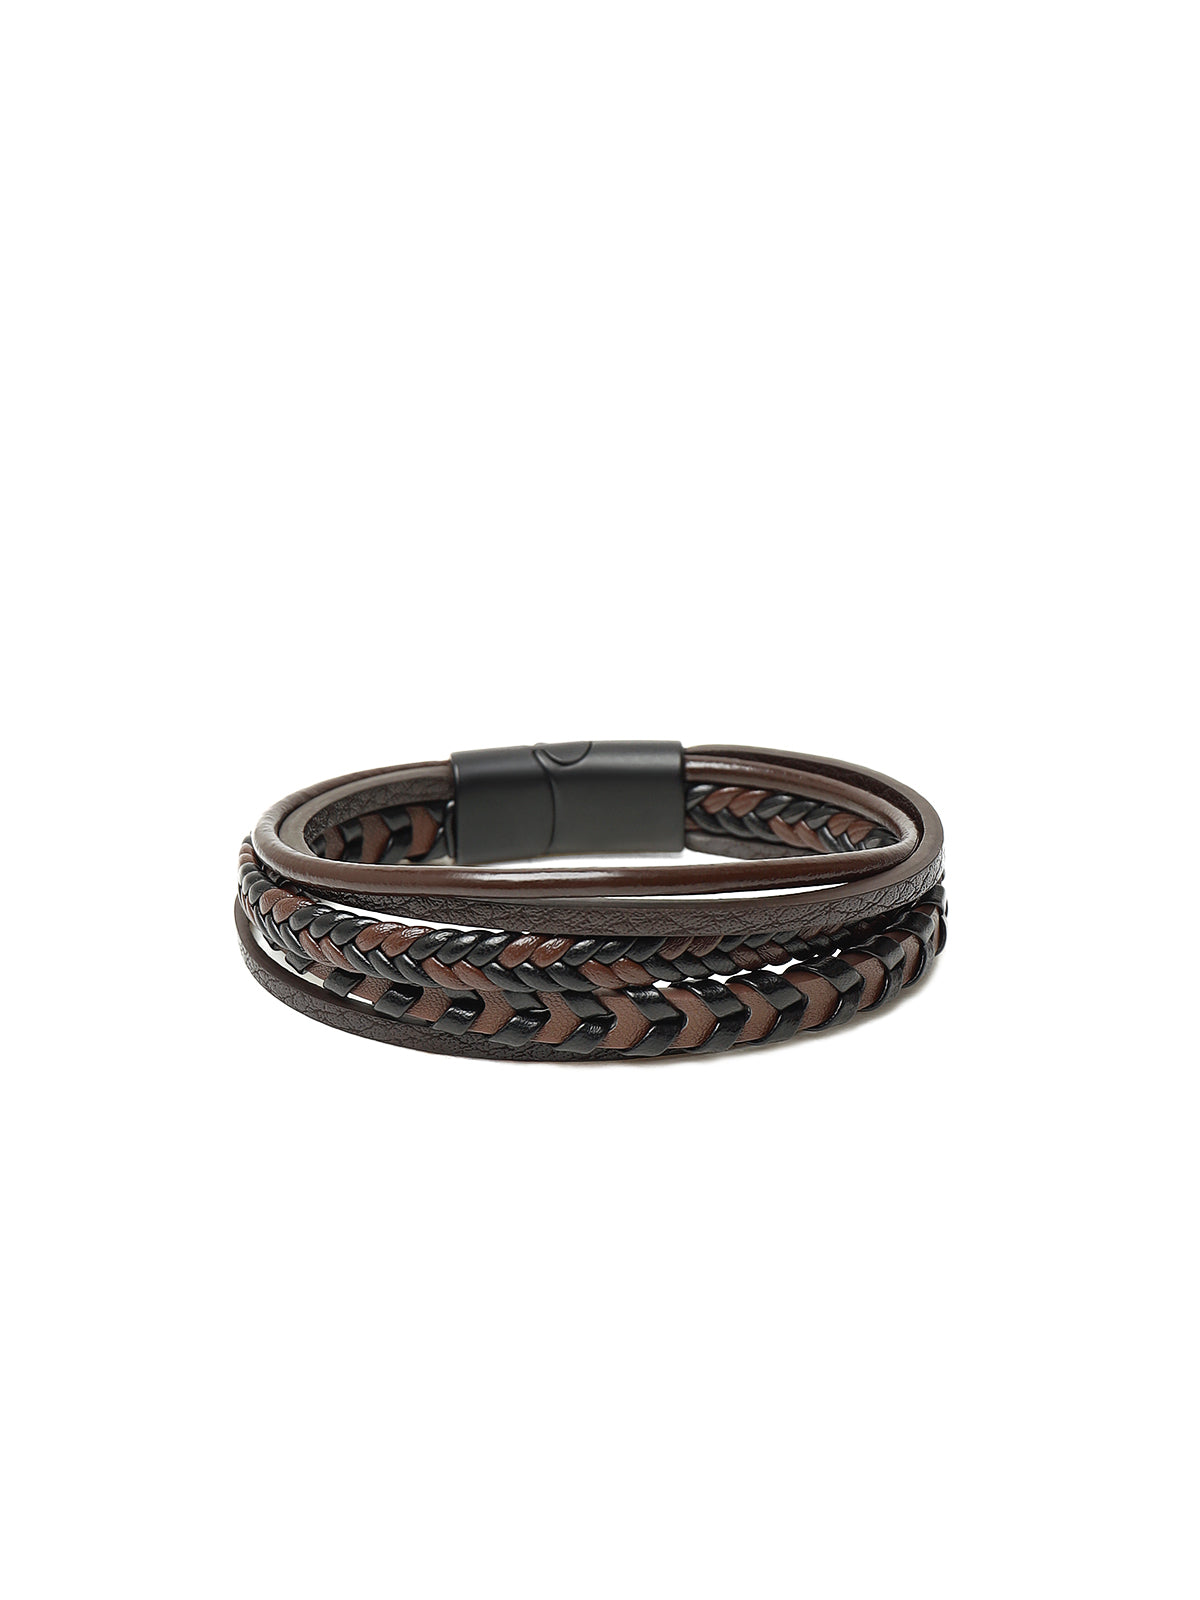 Brown Leather Bracelet - FABR24-013